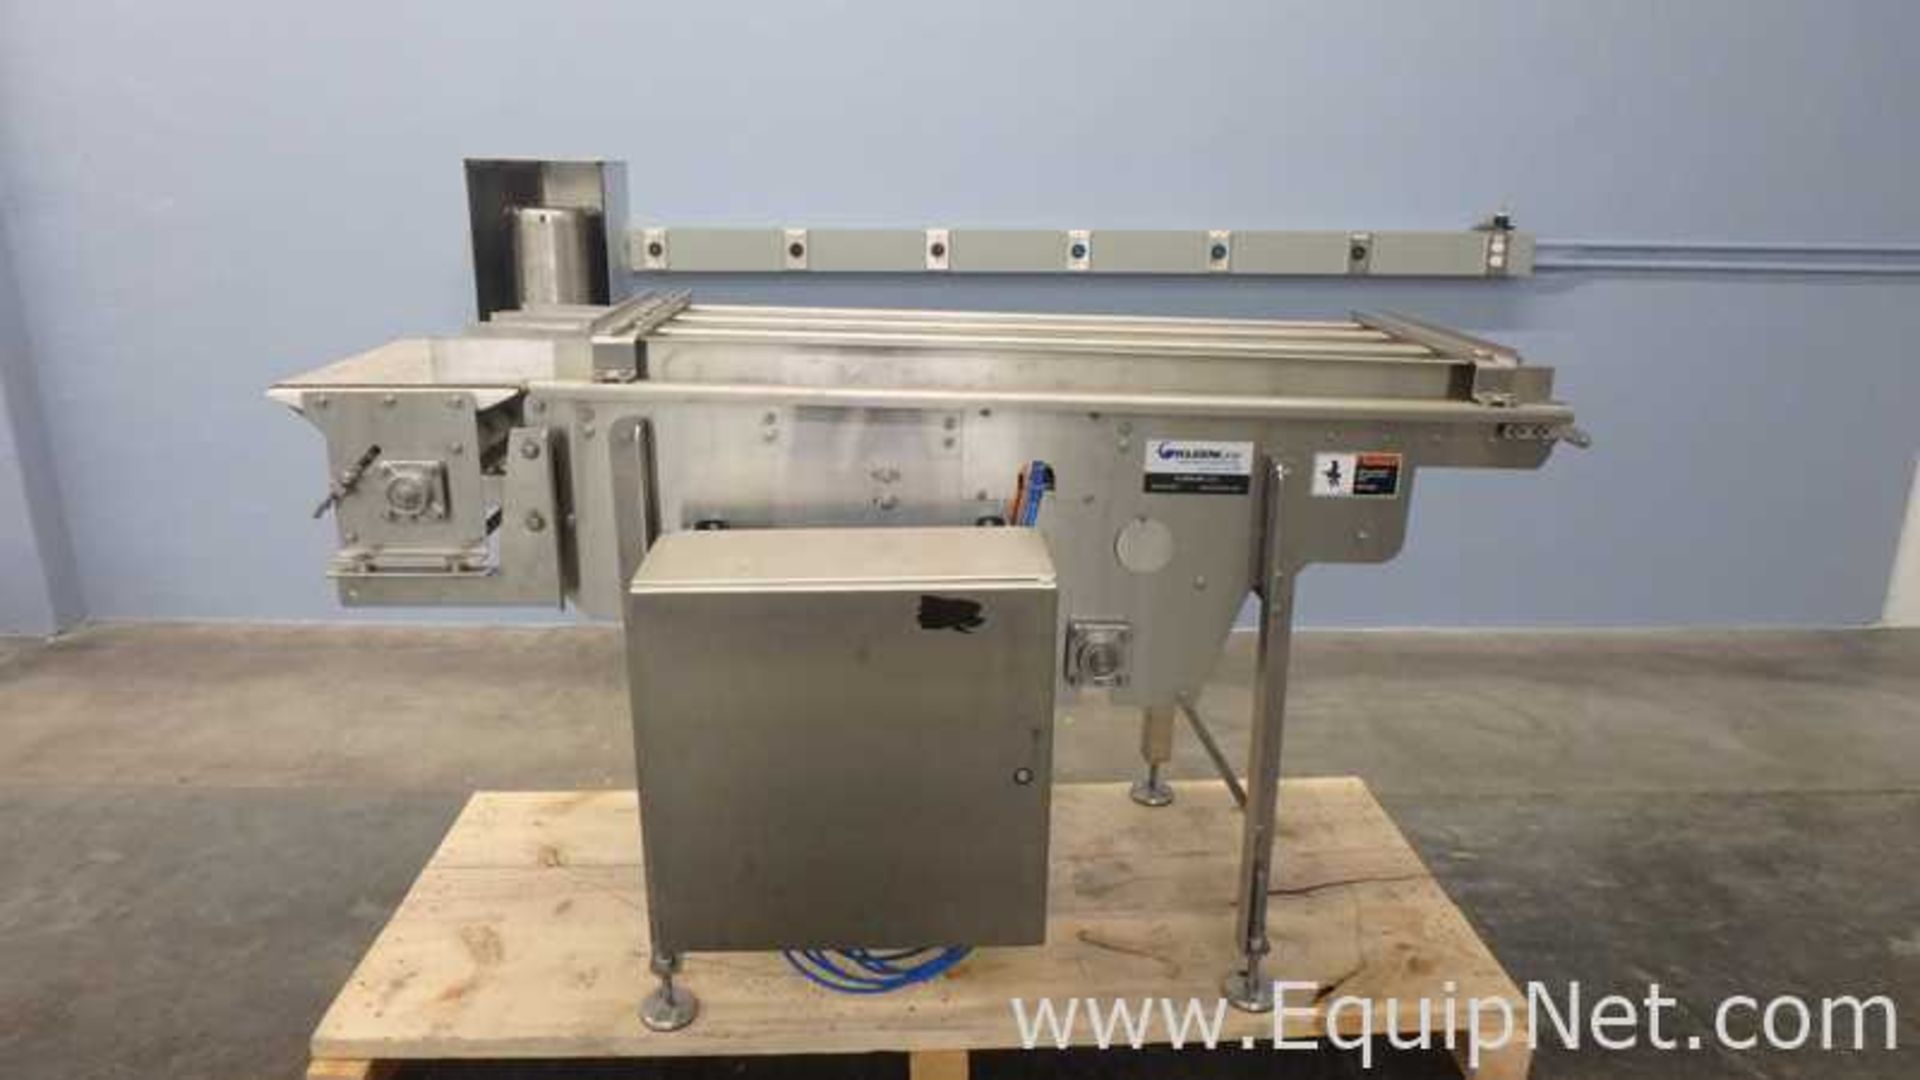 KleenLine Engineered Stainless Steel Conveyor Designed for Full Washdown